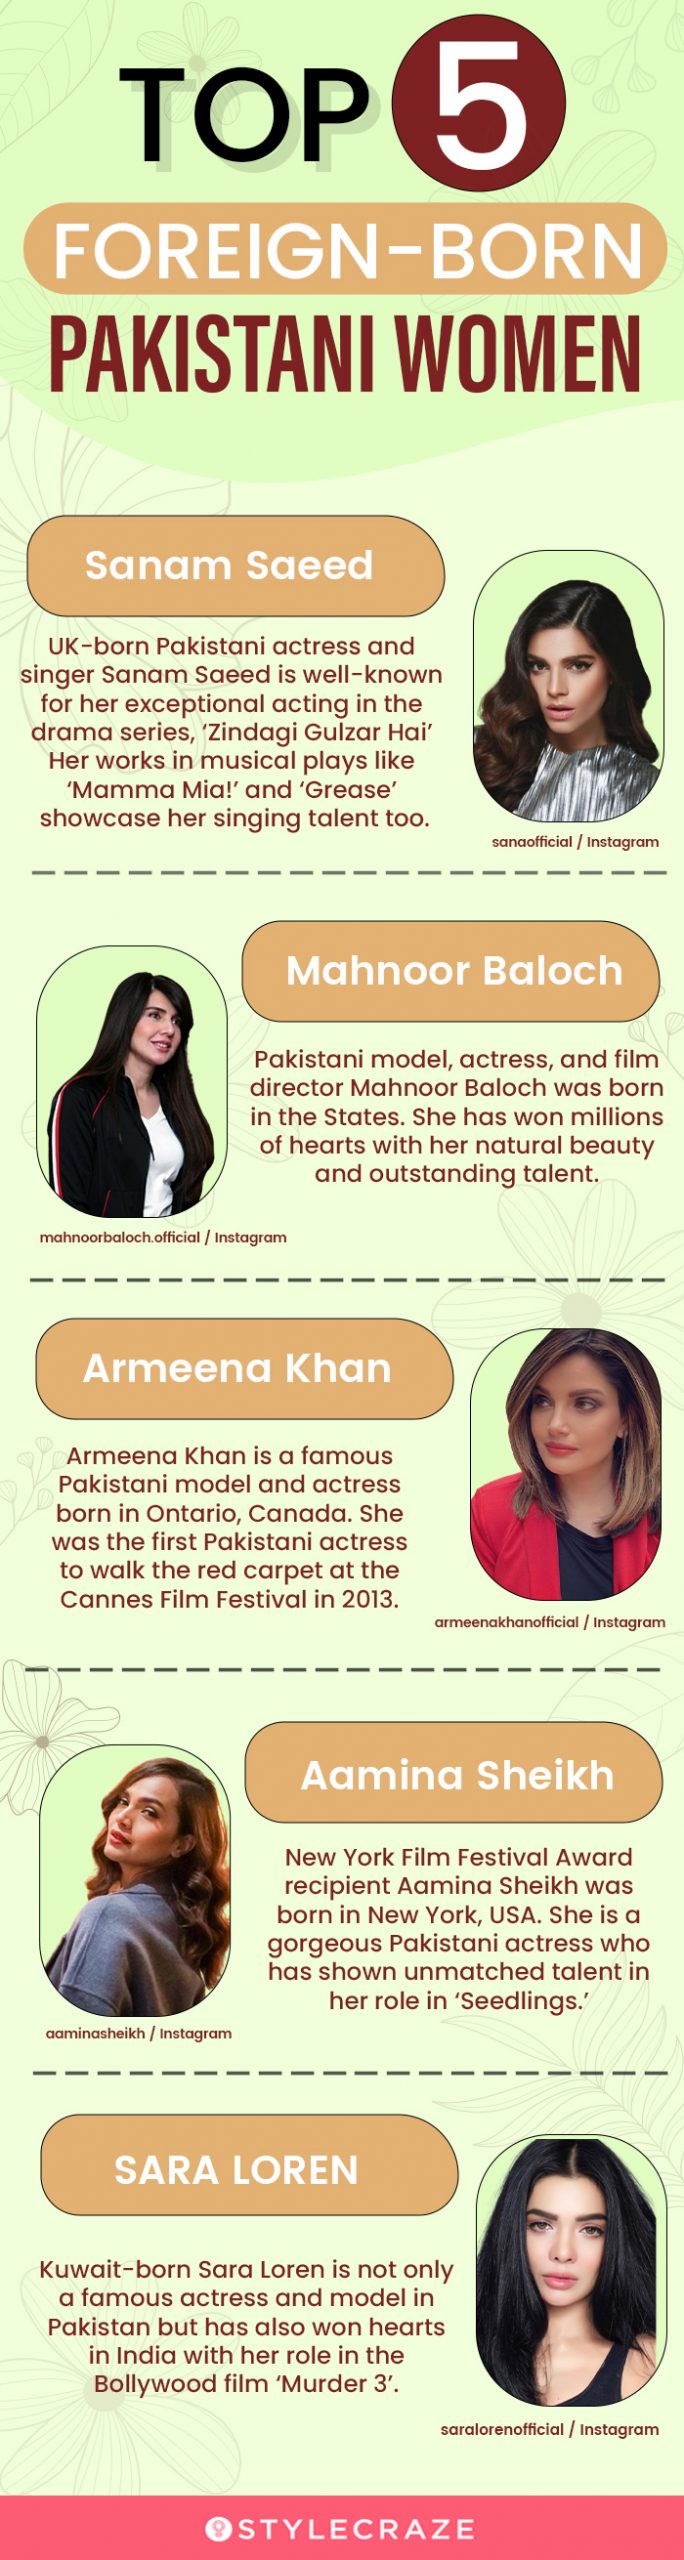 top 5 foreign born pakistani women (infographic)